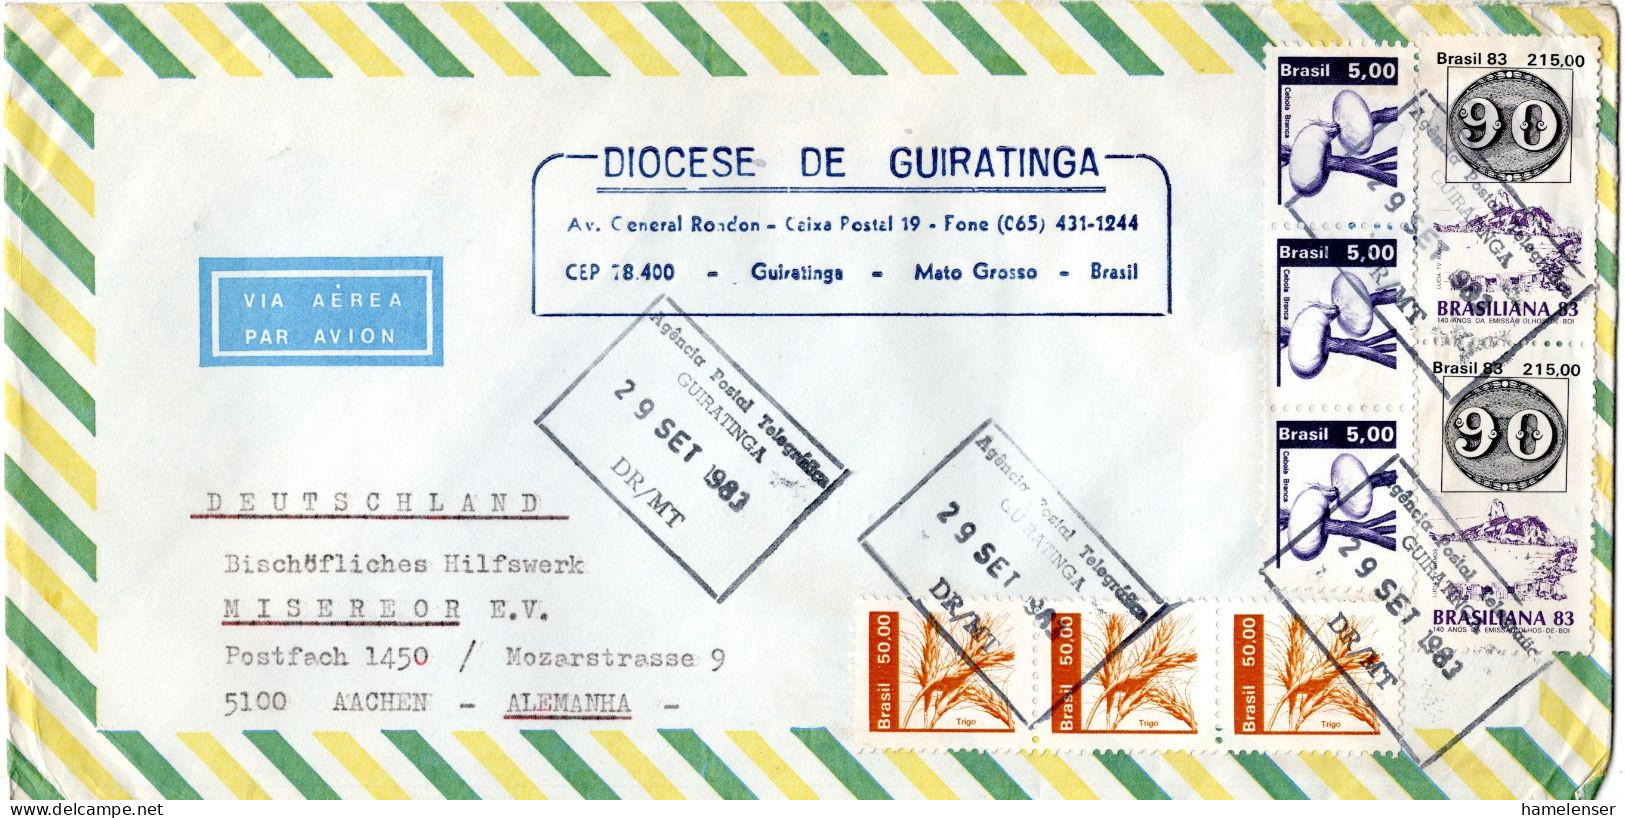 L75020 - Brasilien - 1983 - 2@Cr215,00 Brasiliana '83 MiF A LpBf GUIRATINGA -> Westdeutschland - Covers & Documents